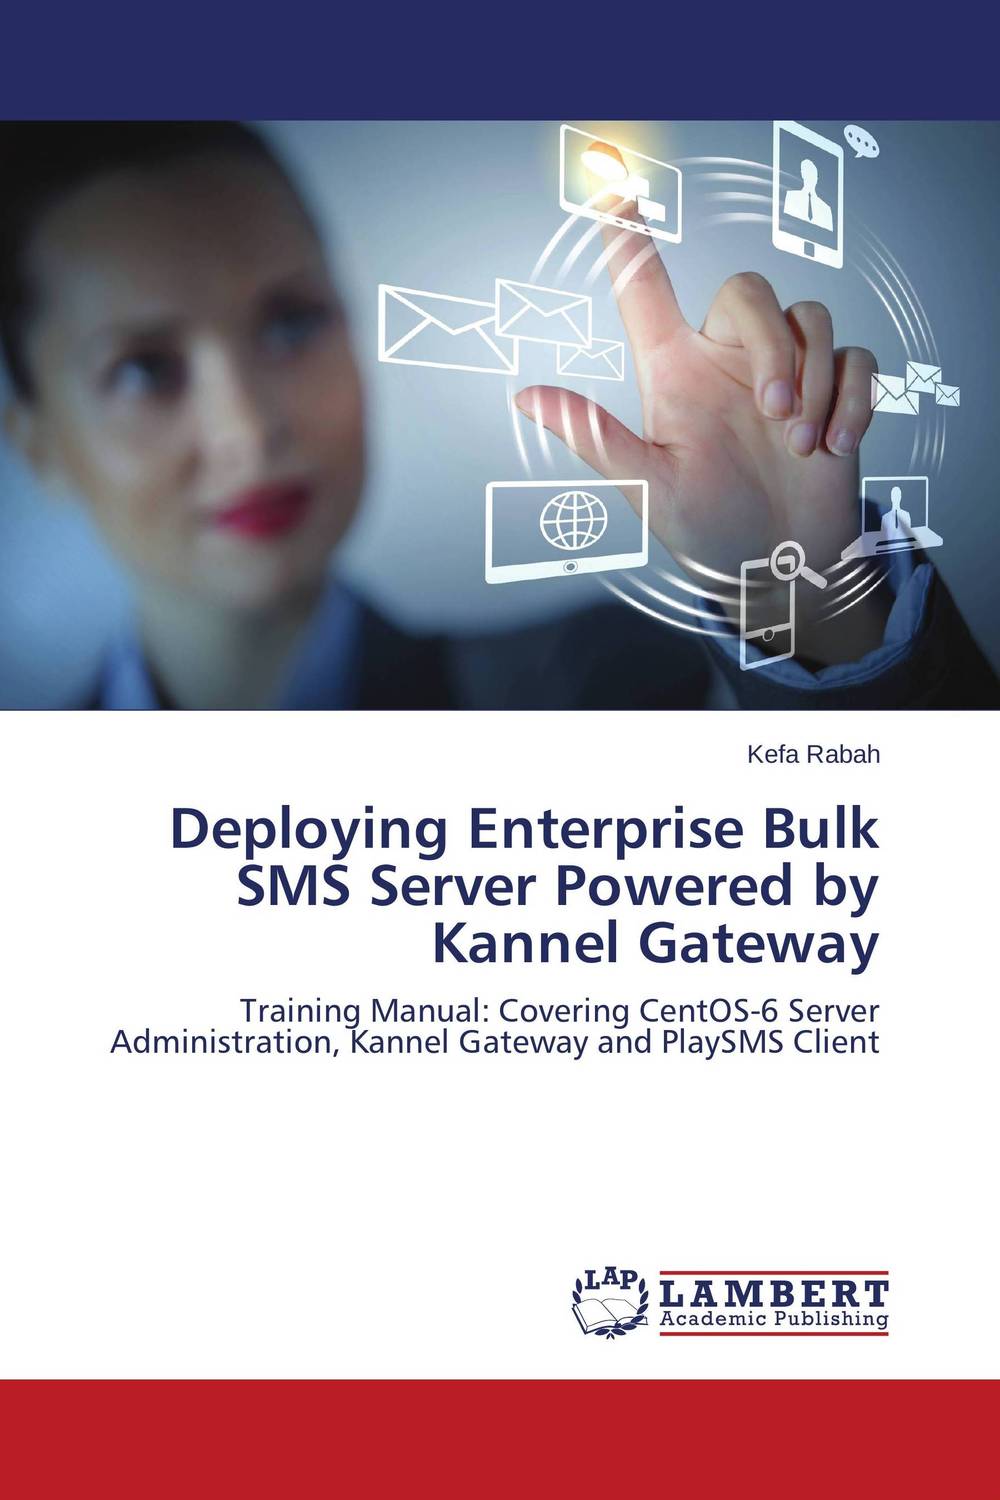 Deploying Enterprise Bulk SMS Server Powered by Kannel Gateway